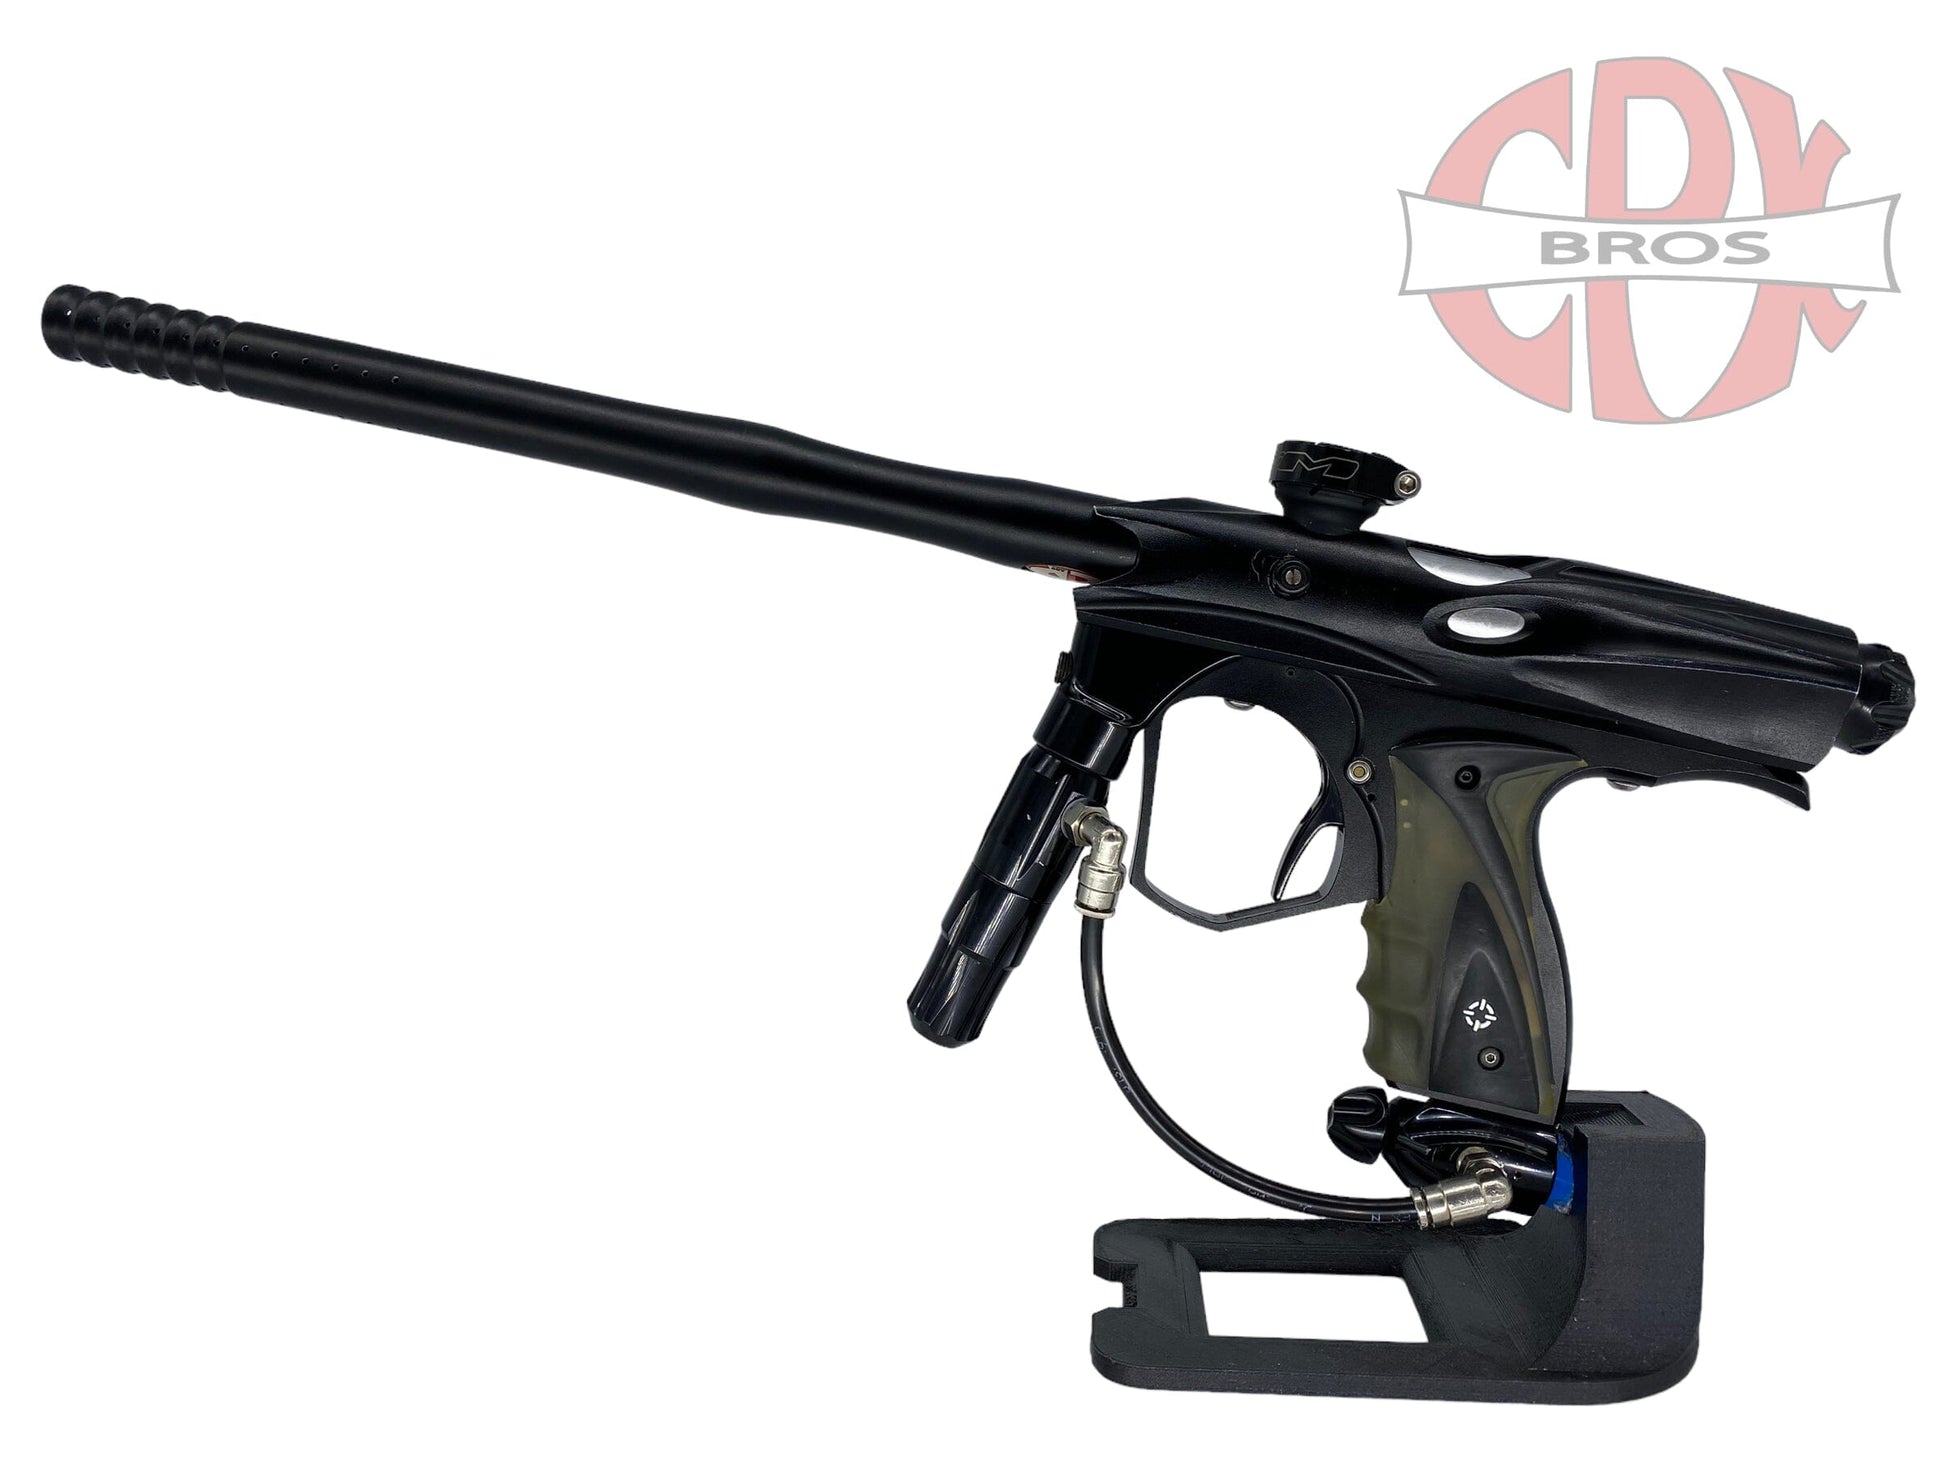 Used Sp Hybrid Traitor Shocker SFT Paintball Gun from CPXBrosPaintball Buy/Sell/Trade Paintball Markers, Paintball Hoppers, Paintball Masks, and Hormesis Headbands